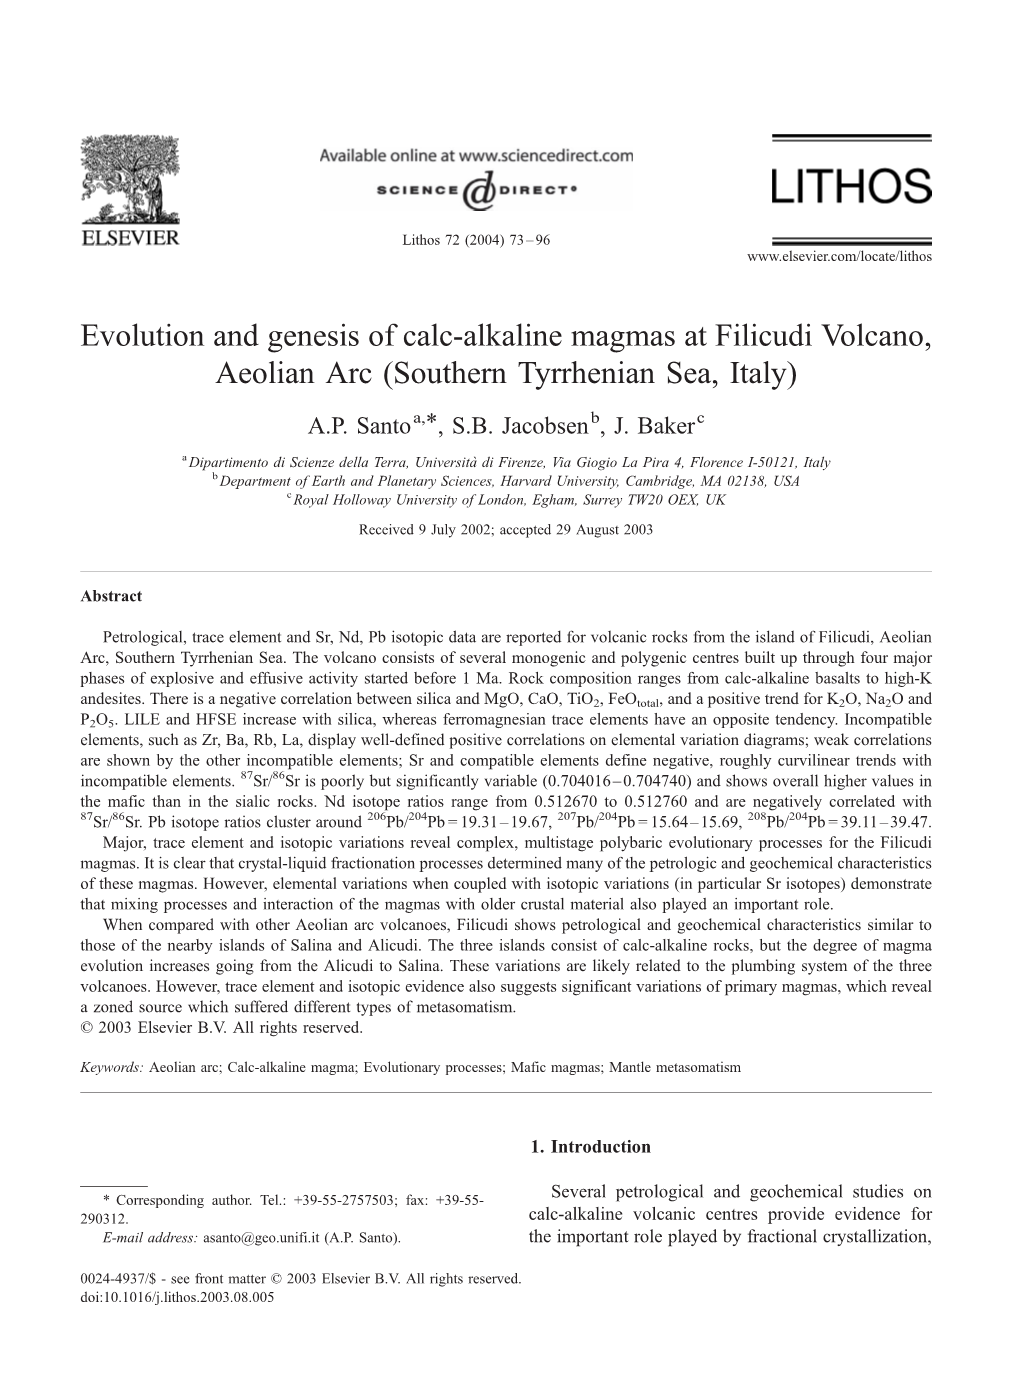 Evolution and Genesis of Calc-Alkaline Magmas at Filicudi Volcano, Aeolian Arc (Southern Tyrrhenian Sea, Italy)